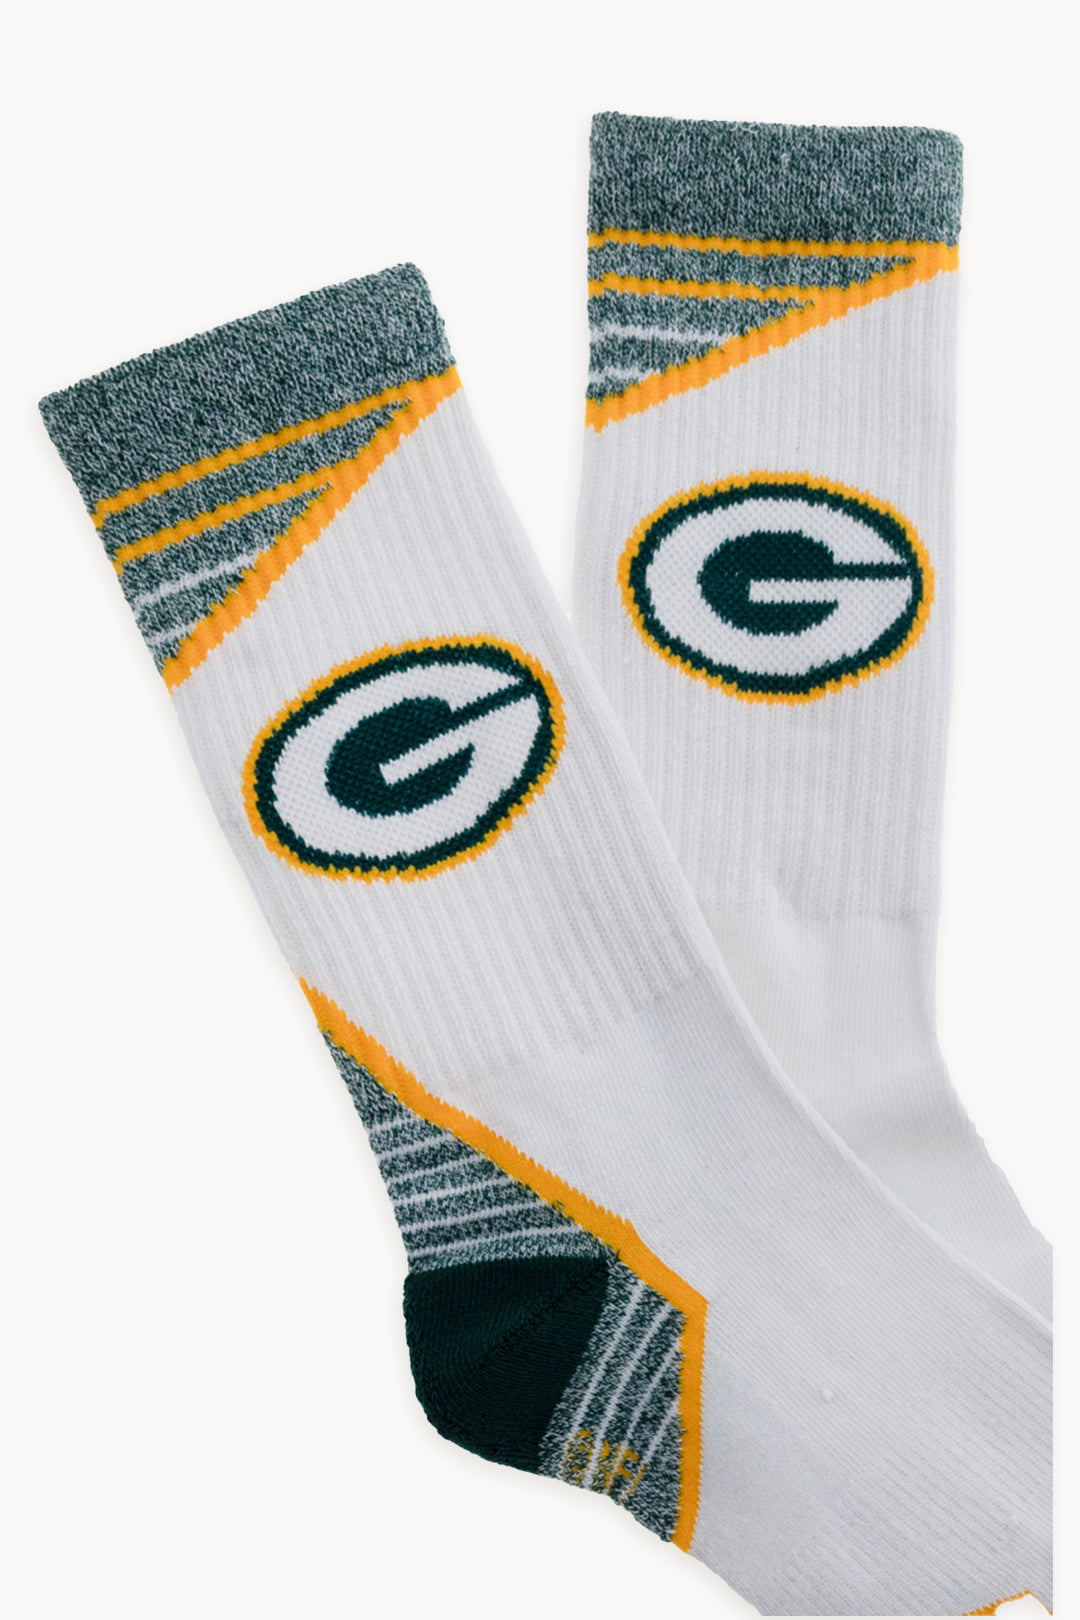 Gertex NFL Green Bay Packers 3-Pack Mens Crew Socks